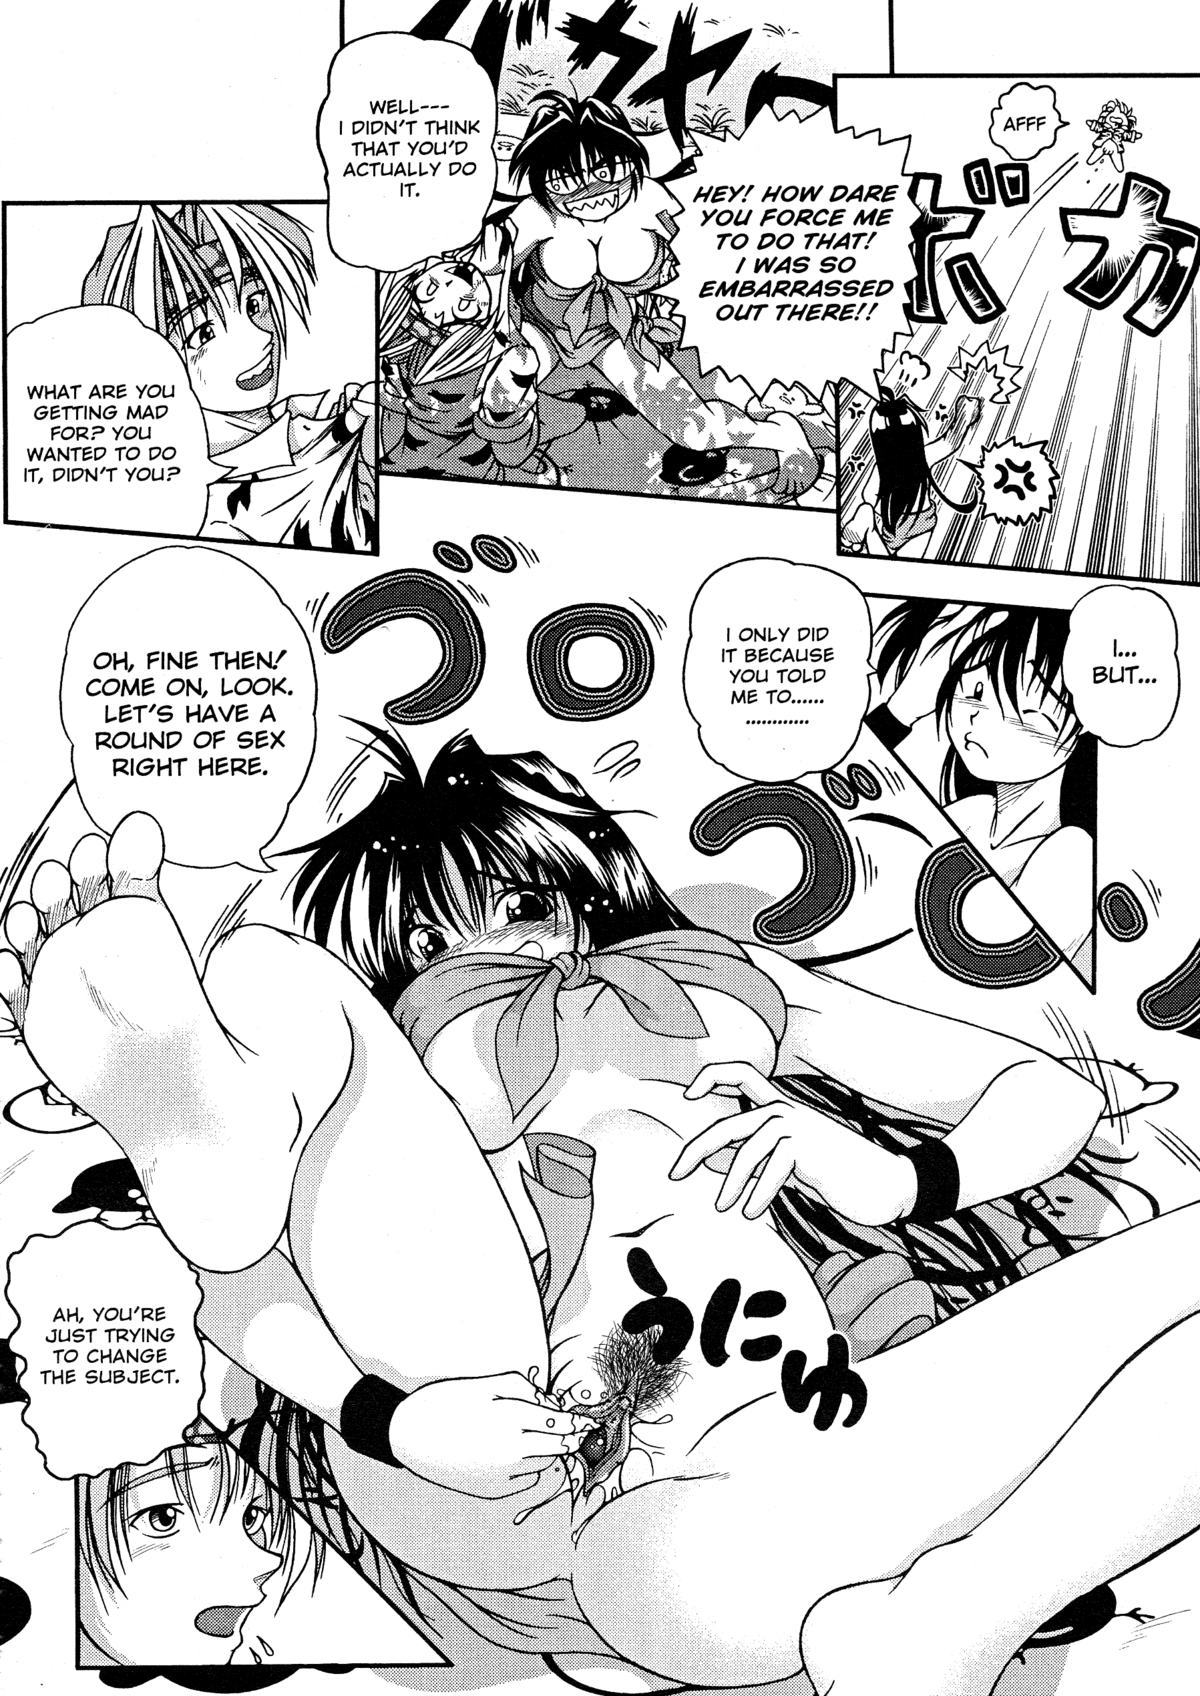 Flashbang!Hi-res 159 hentai manga